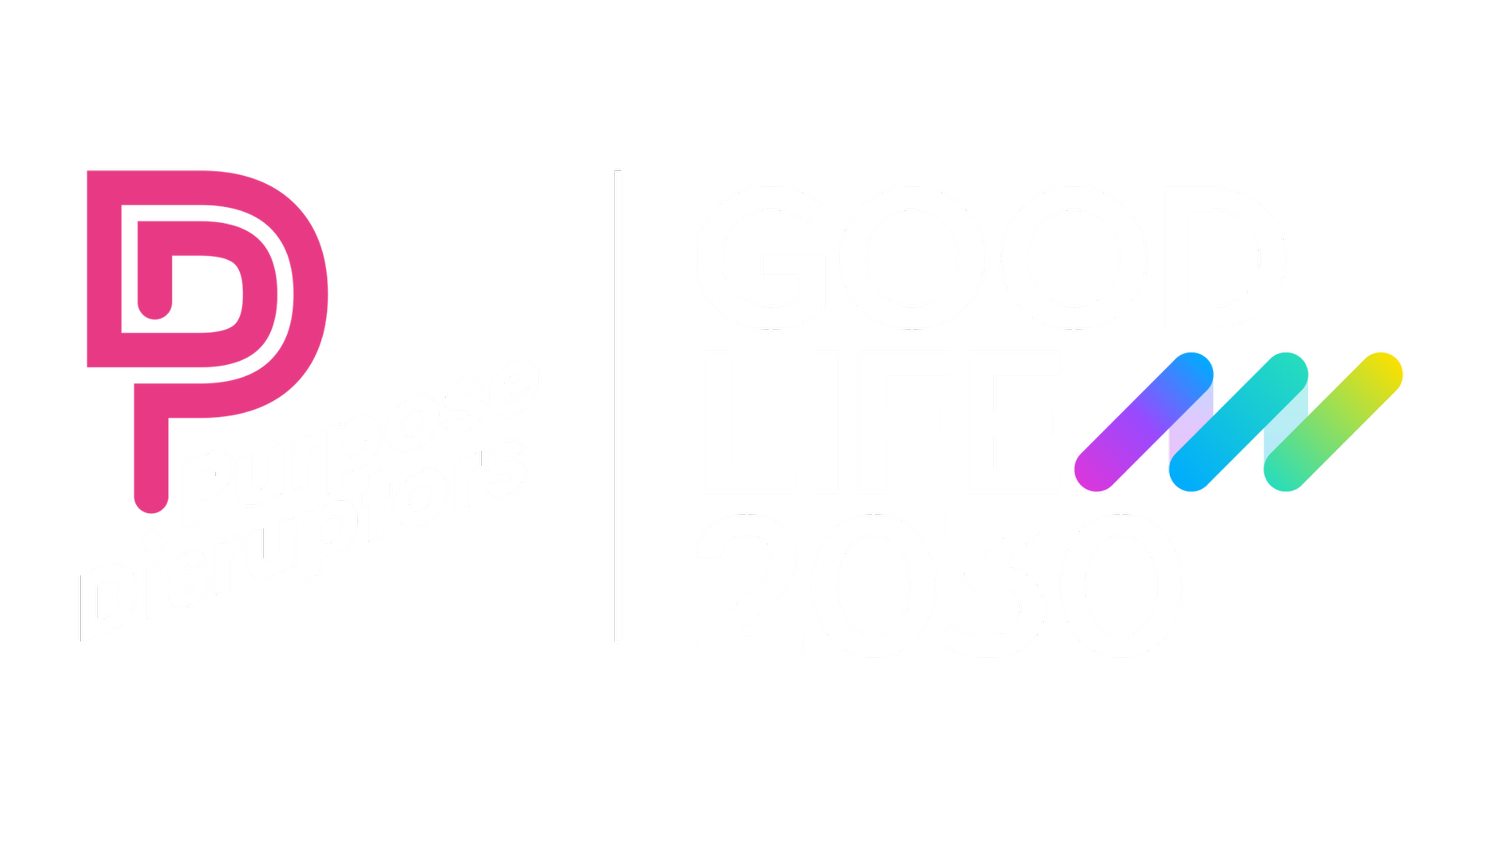 Good Life 2030